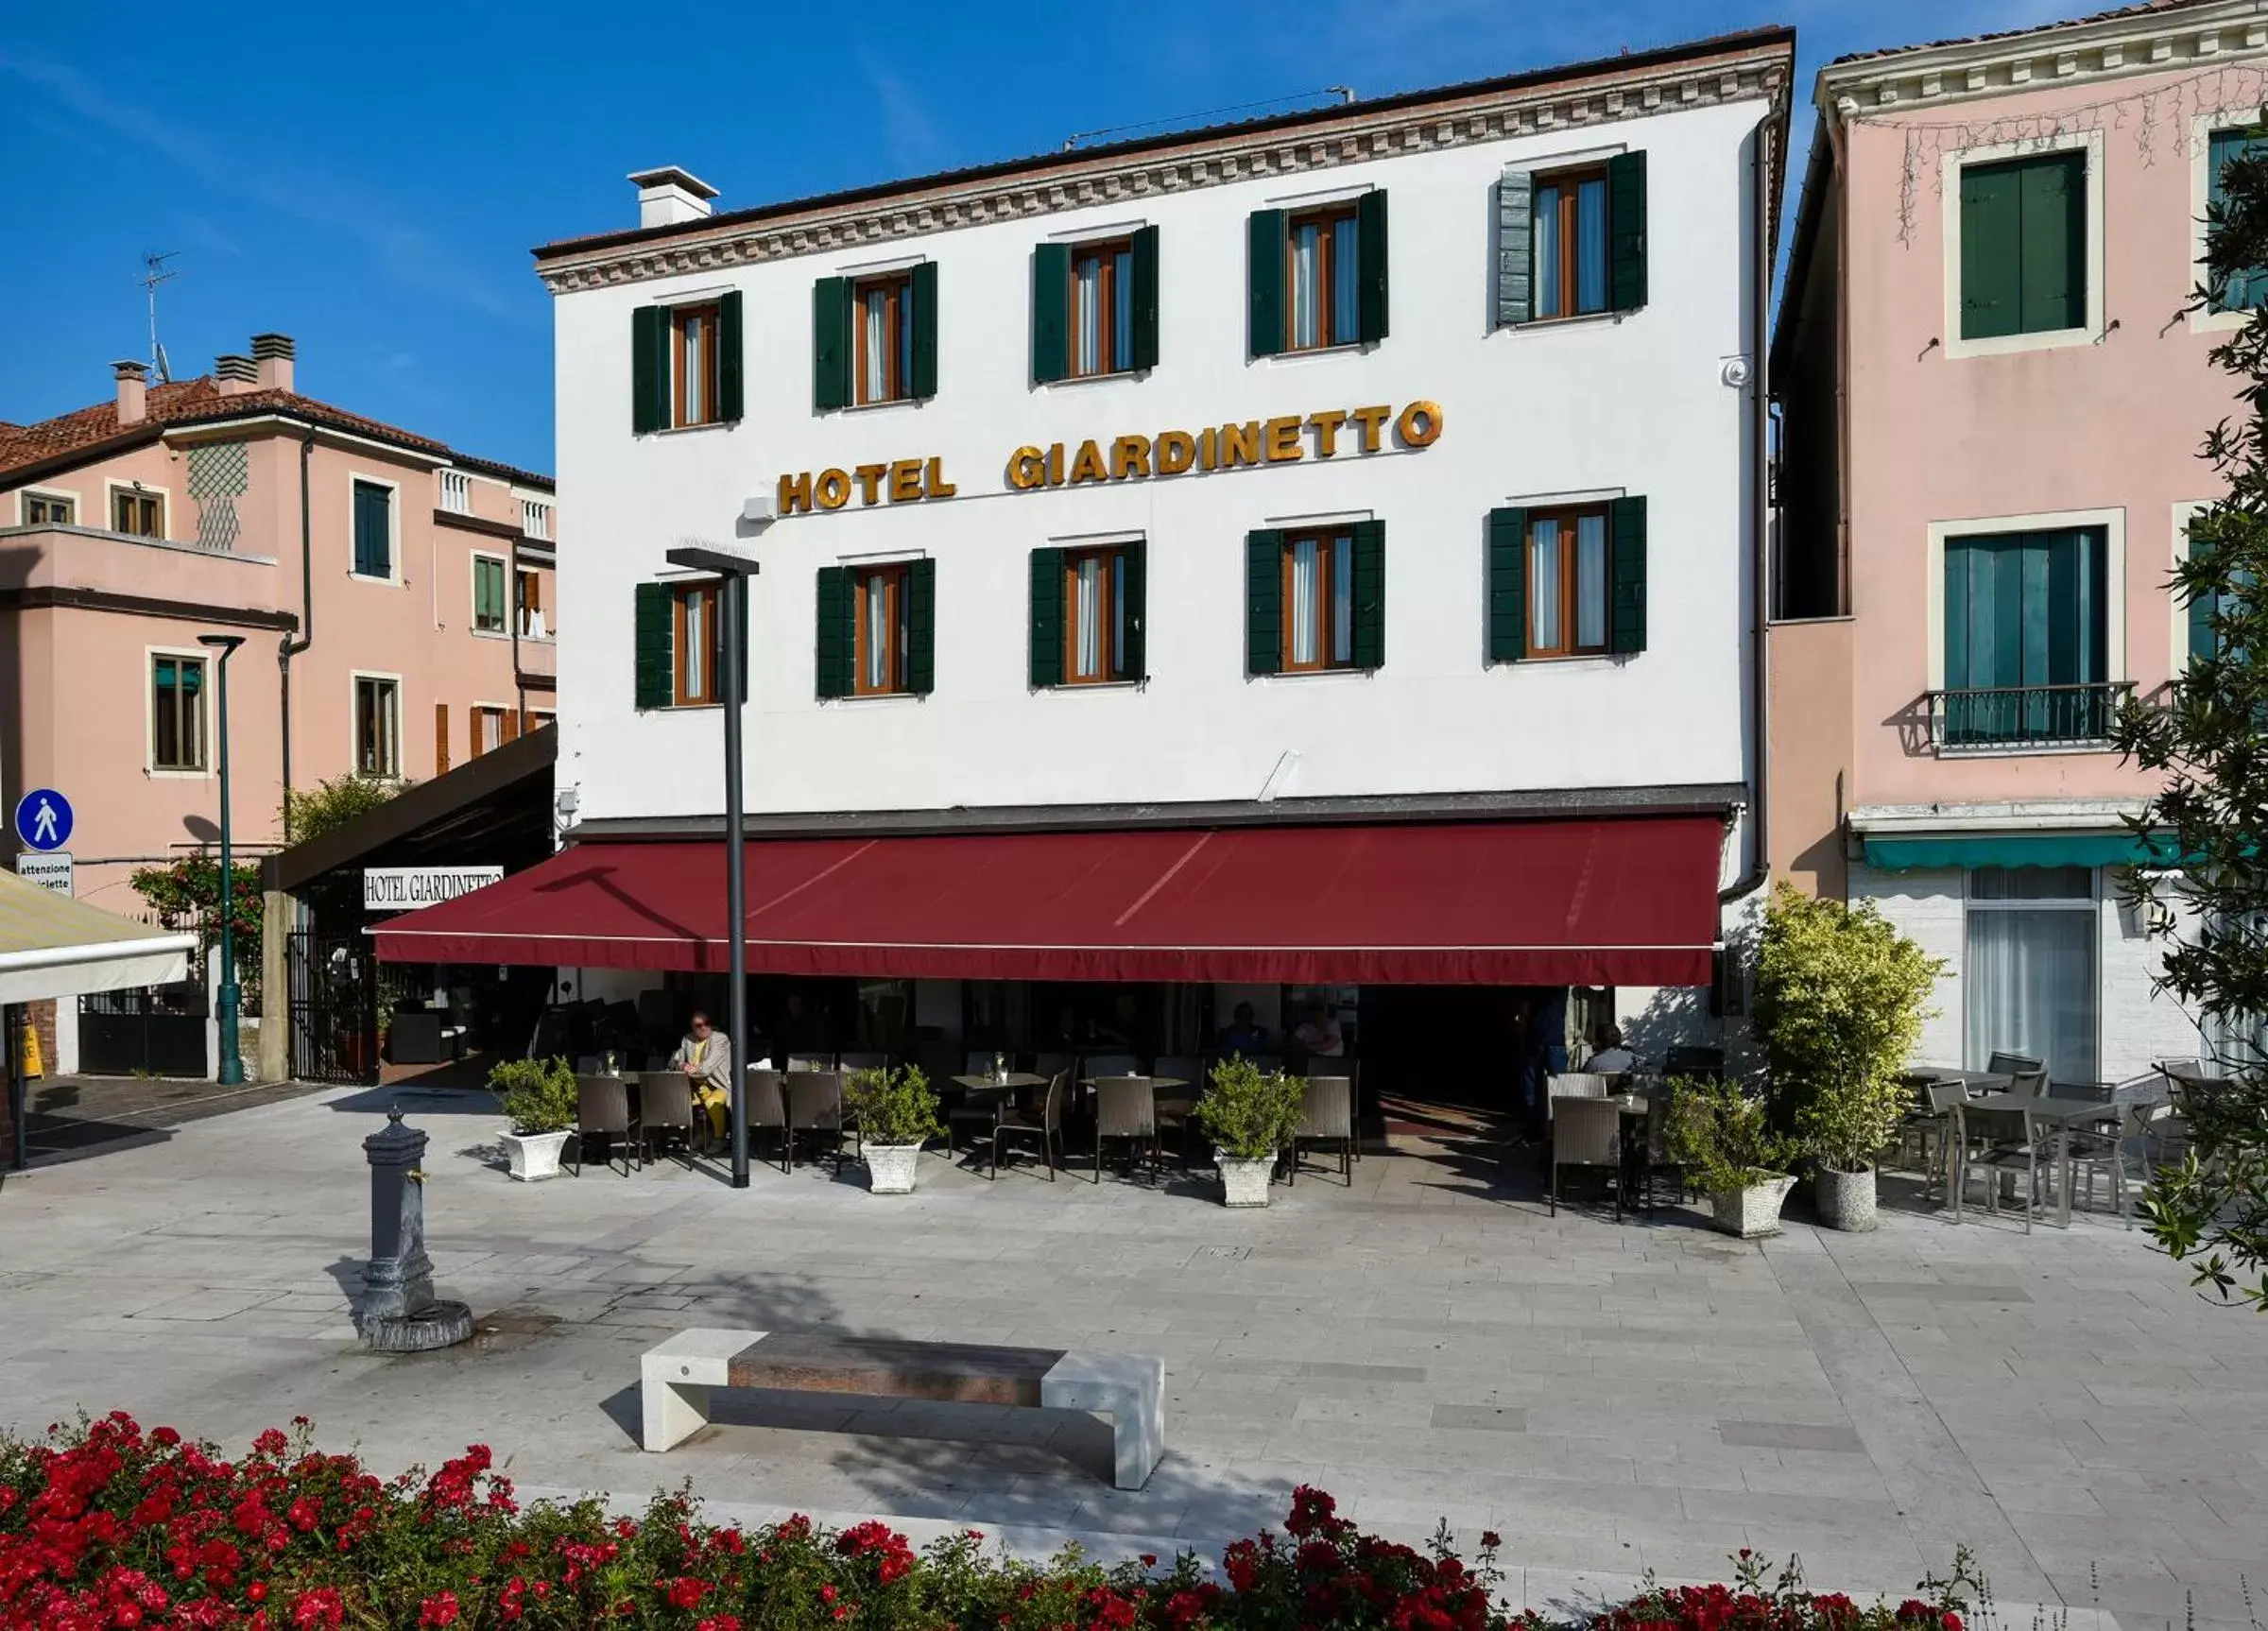 Property Building in Hotel Giardinetto Venezia